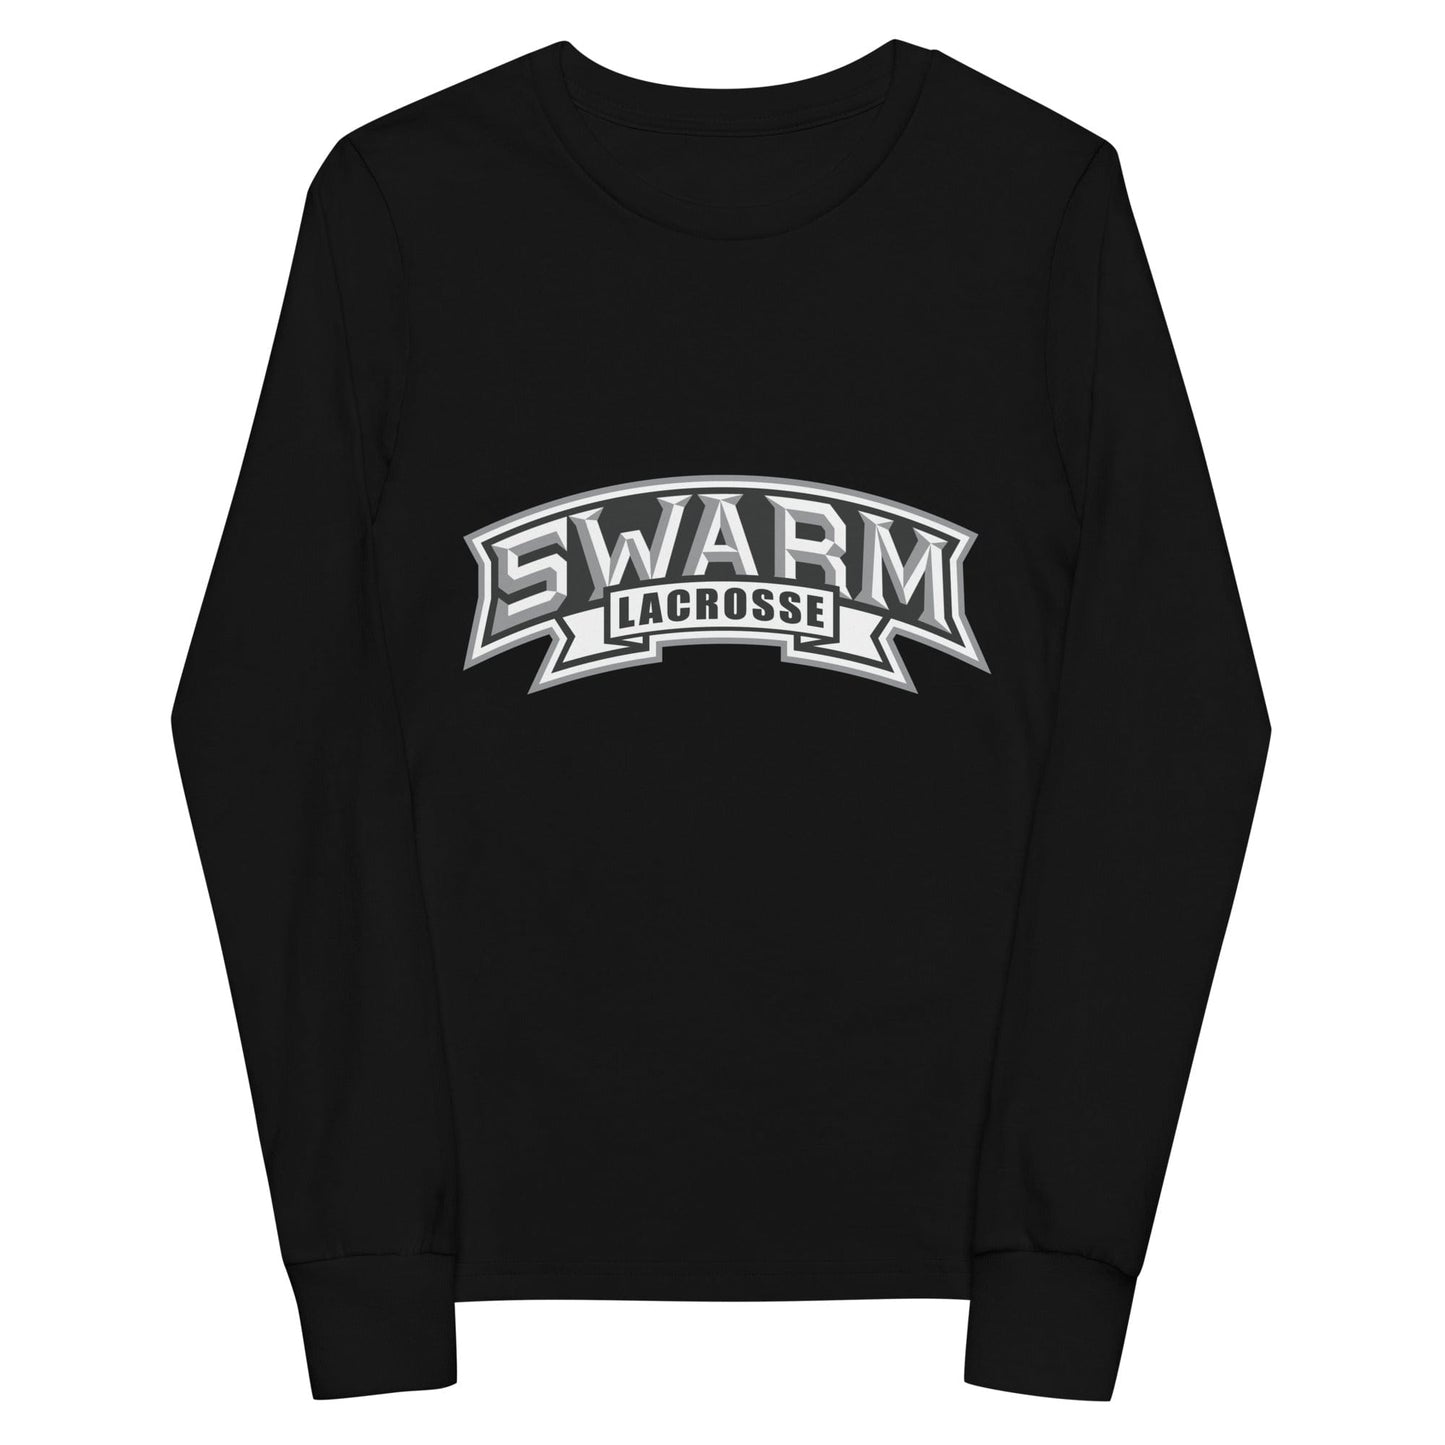 Swarm Lacrosse Youth Cotton Long Sleeve T-Shirt Signature Lacrosse